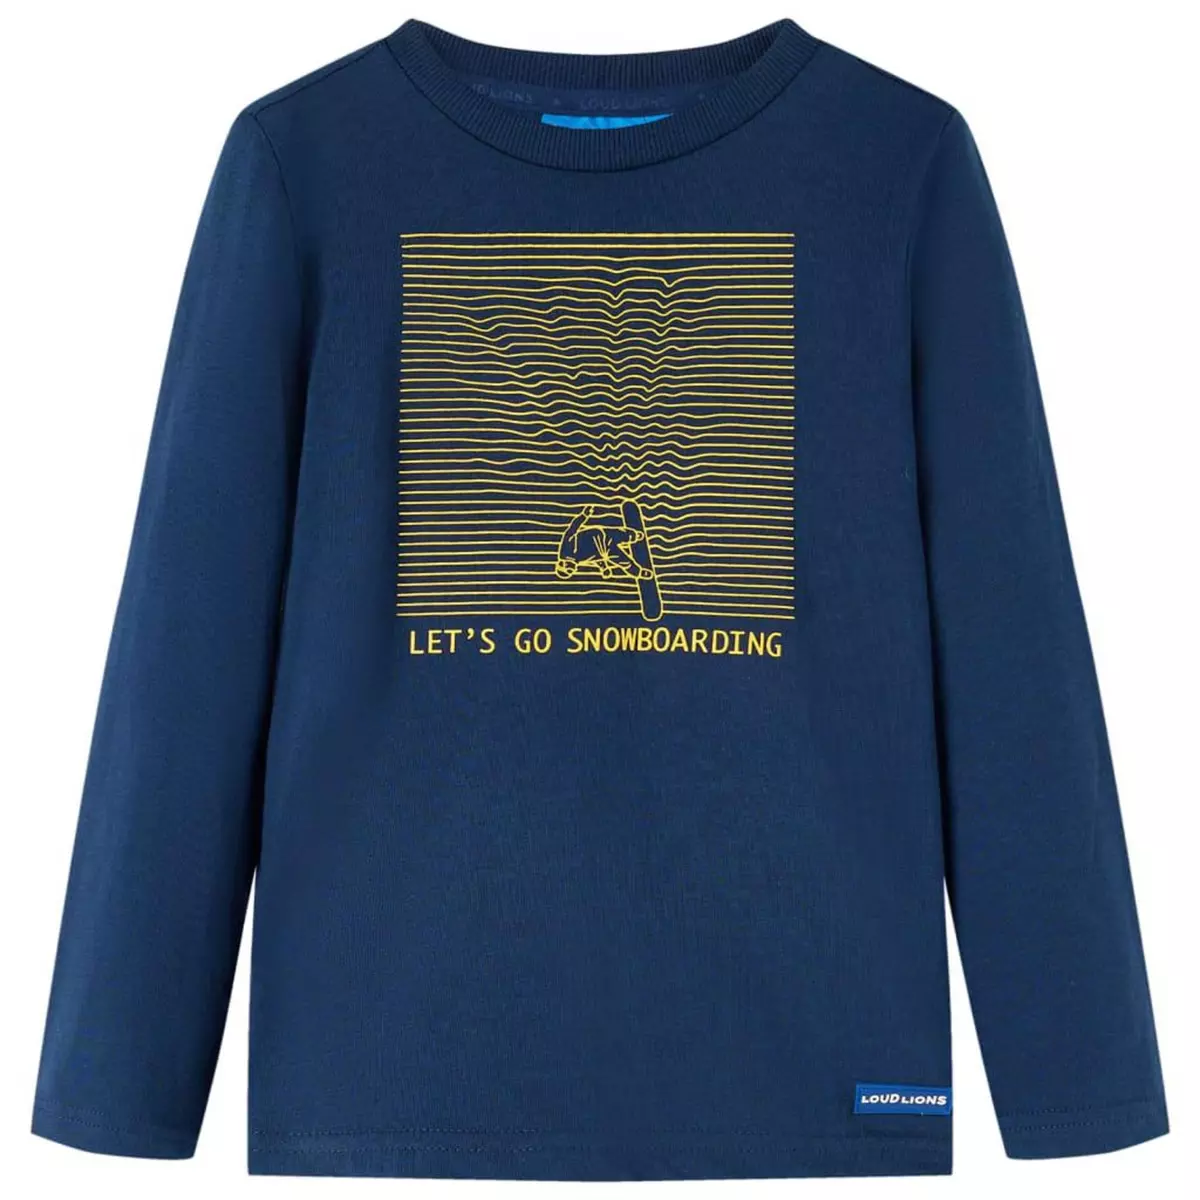 VIDAXL T-shirt enfants manches longues bleu marine 104